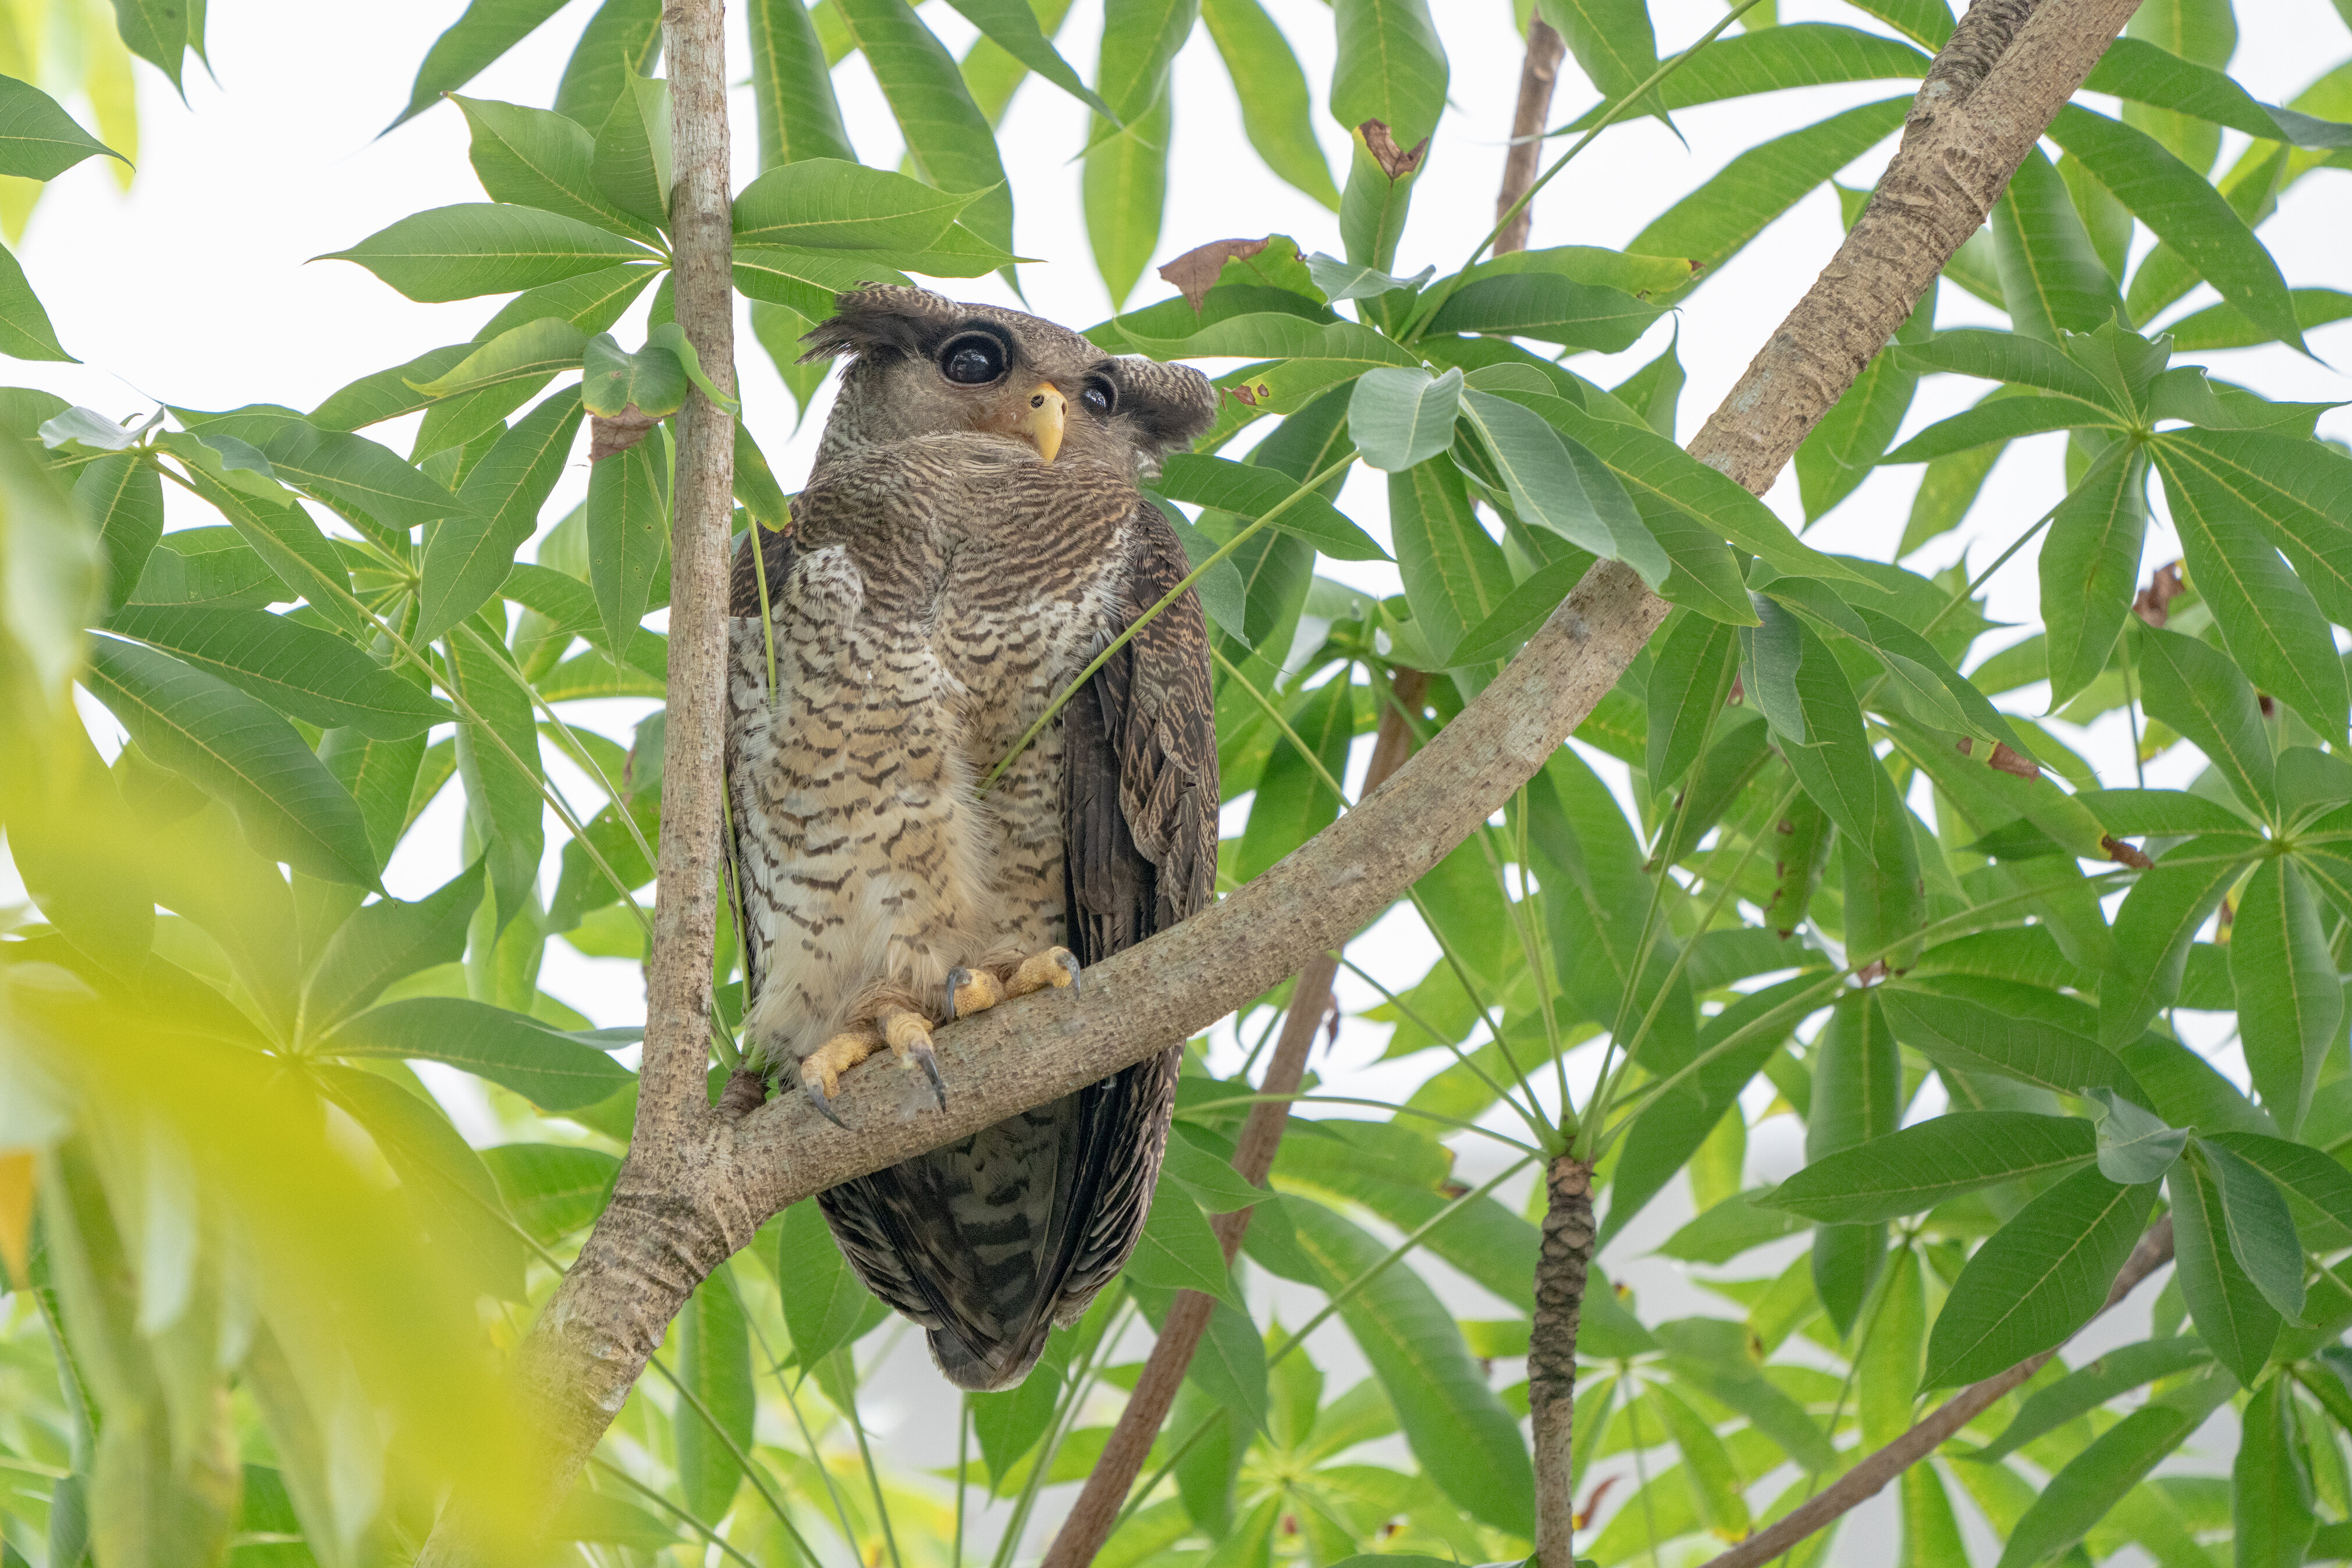 Barred Eagle-Owl at NTU on 12 Apr 2022. Photo credit: Yip Jen Wei